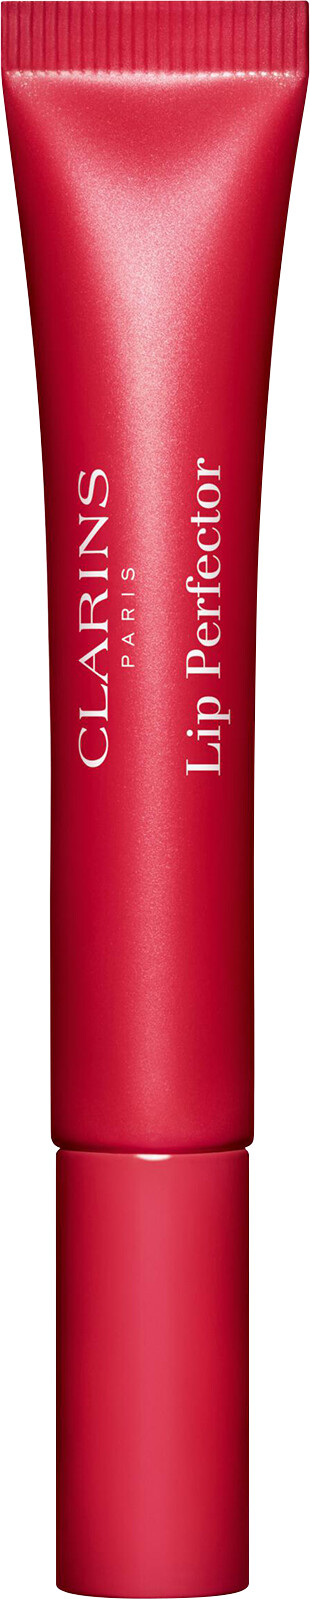 Clarins Lip Perfector Glow 12ml 24 - Fuchsia Glow